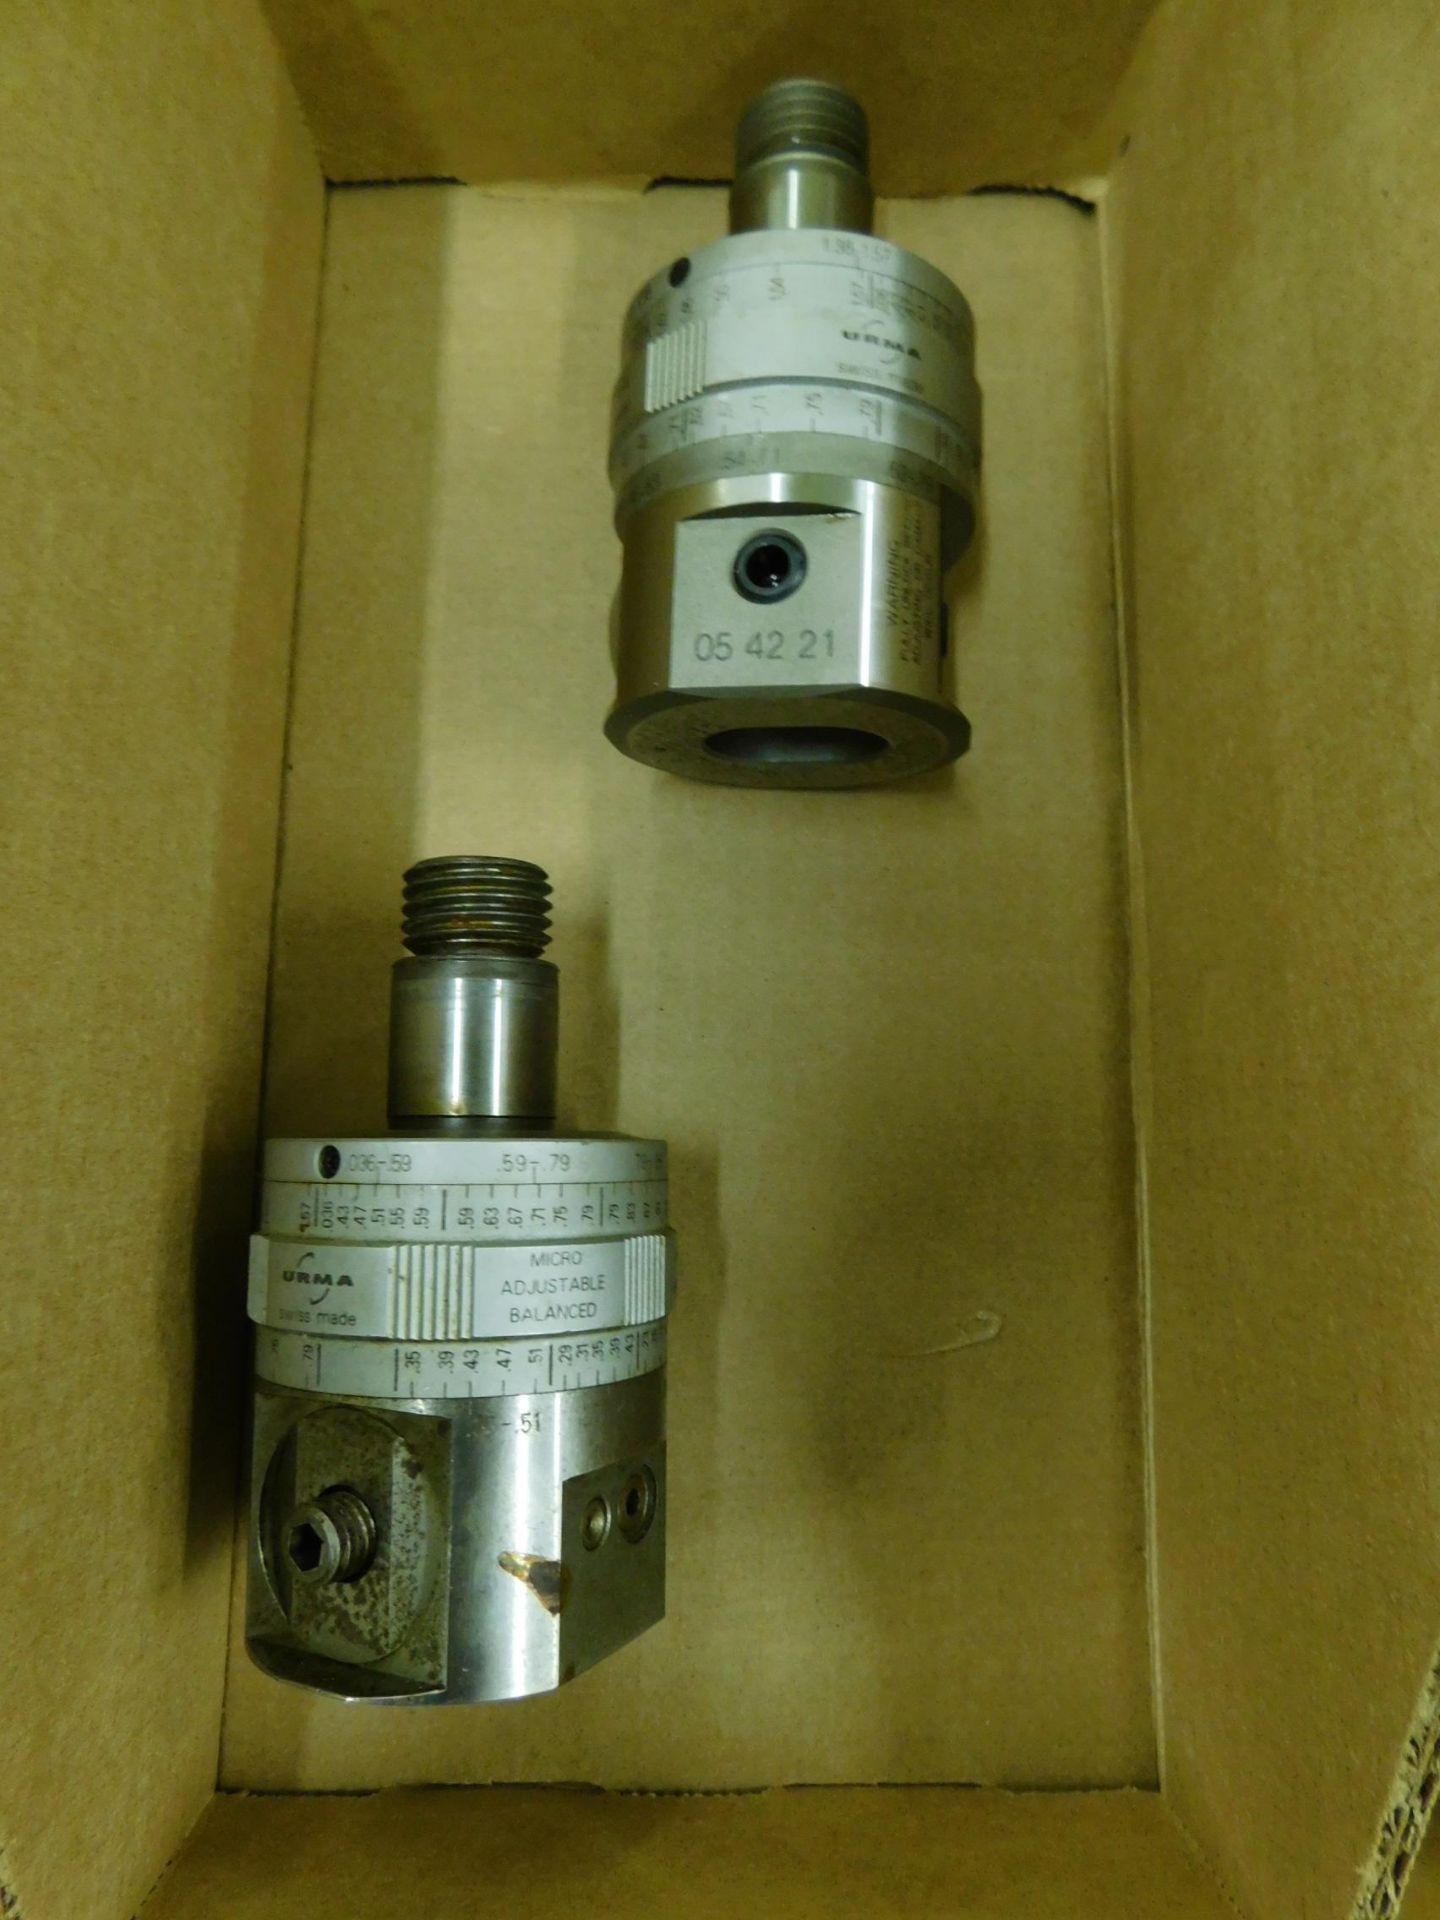 (2) URMA Model 05-42-21 Micro Adjust Boring Heads